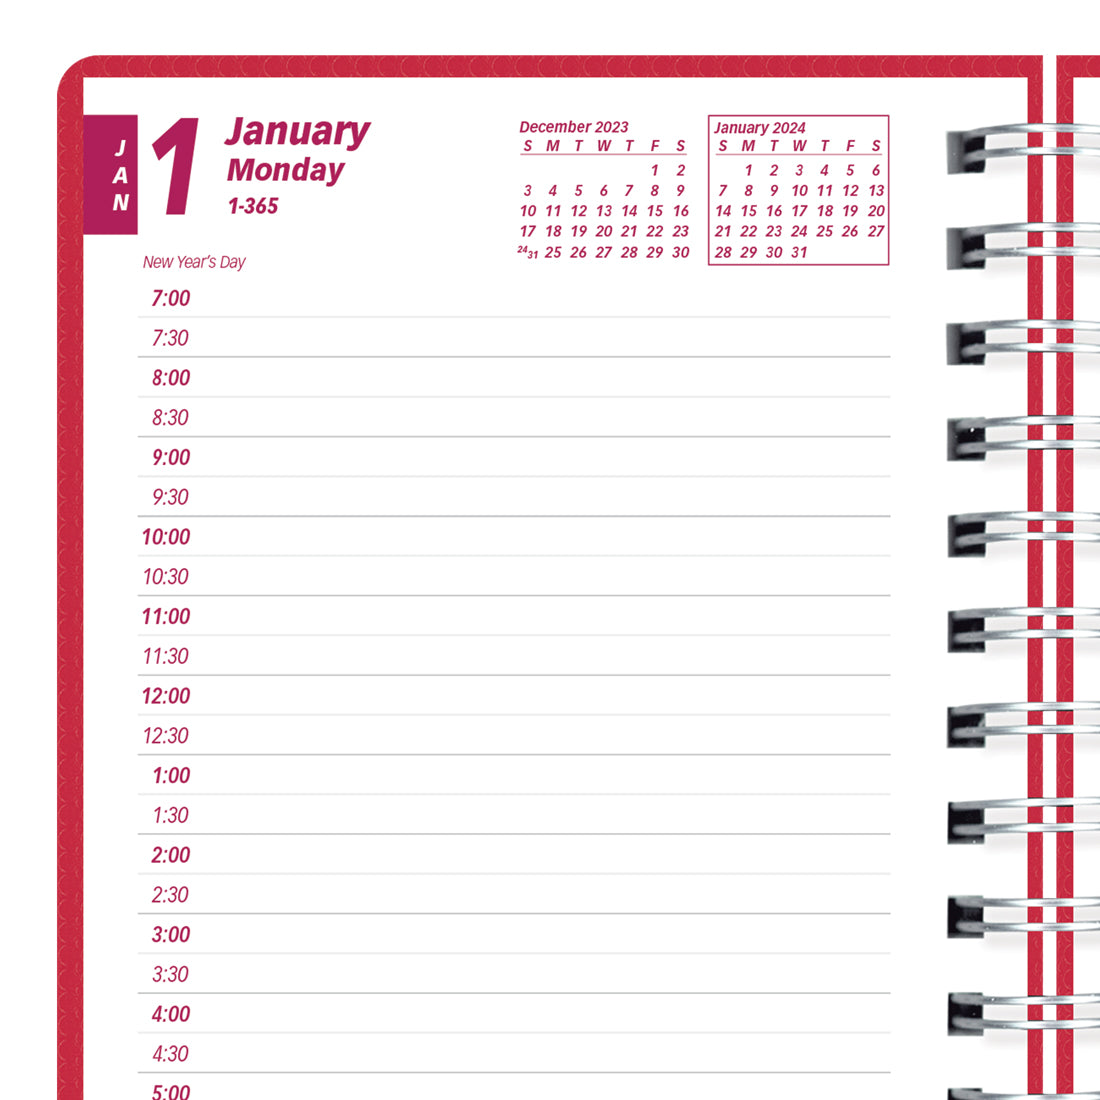 DuraFlex Daily Planner 2024#colour_raspberry